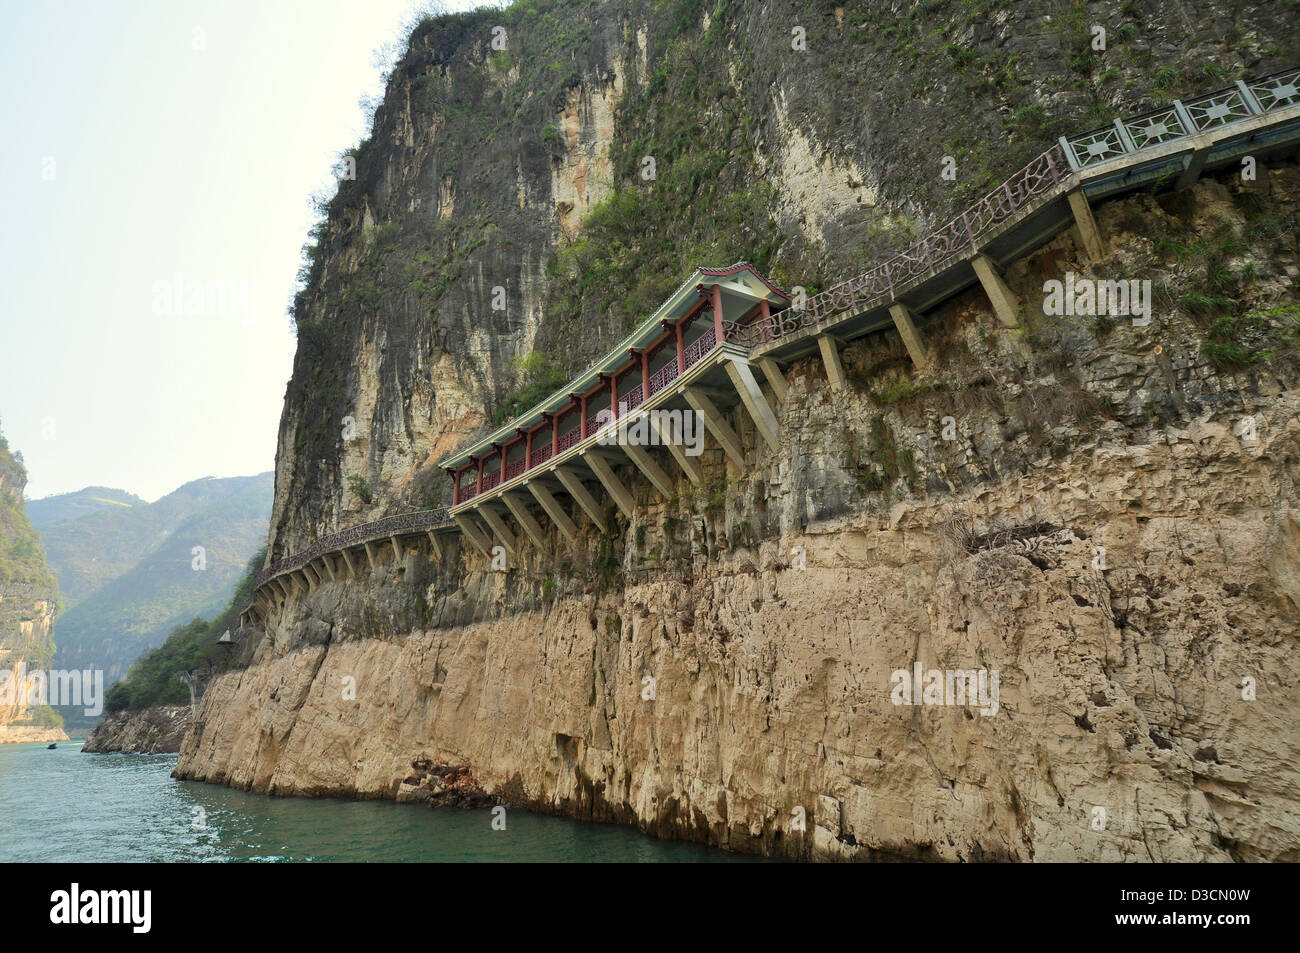 Pasarela construida en la montaña precipicio en las Tres Gargantas menores - Wushan, Chongqing, China Foto de stock